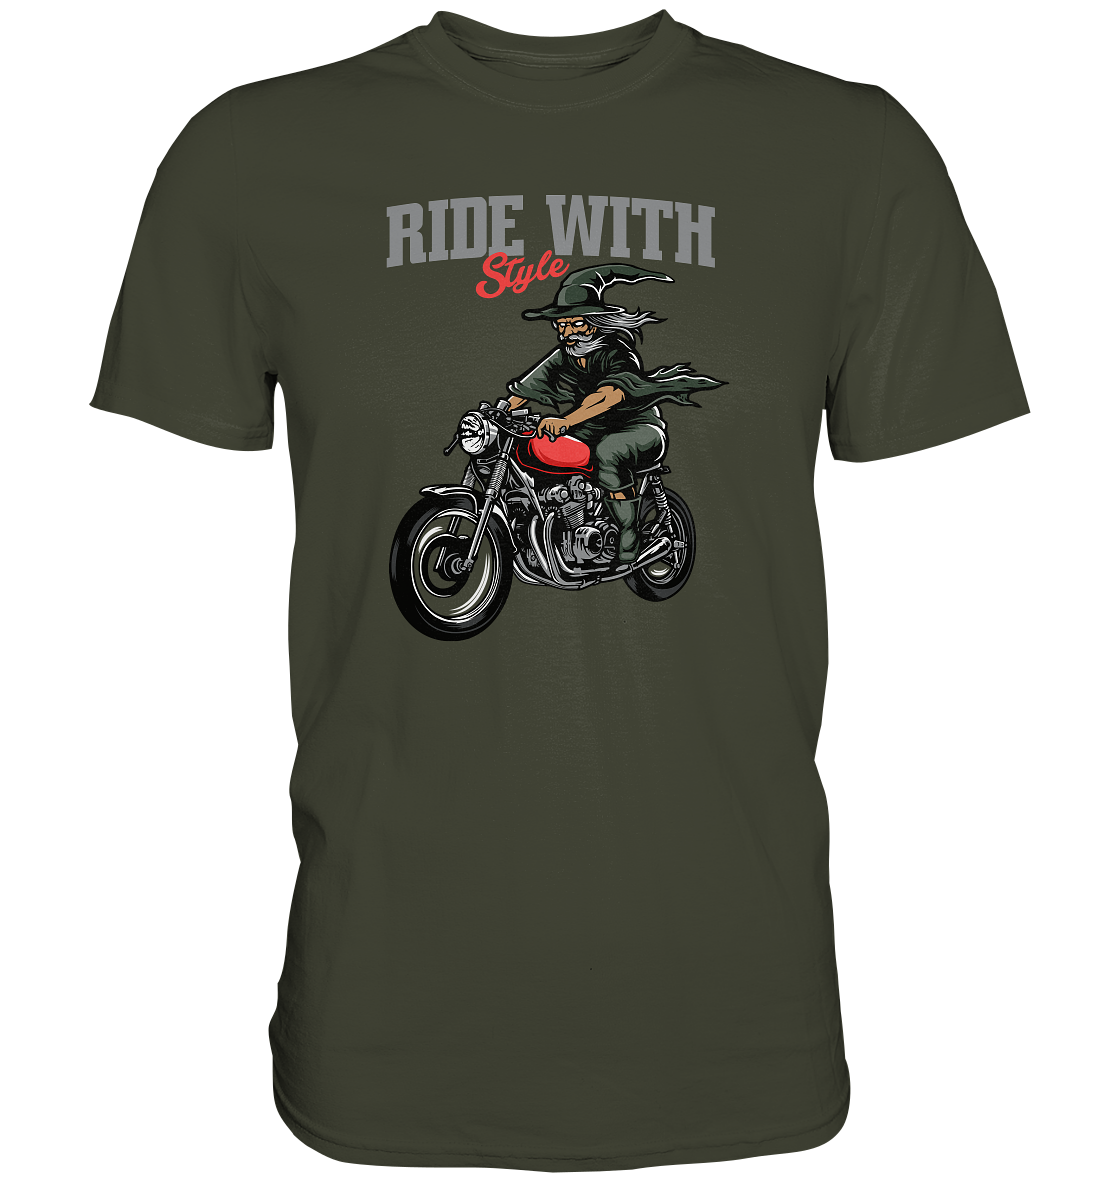 Ride with style - Premium unisex Shirt